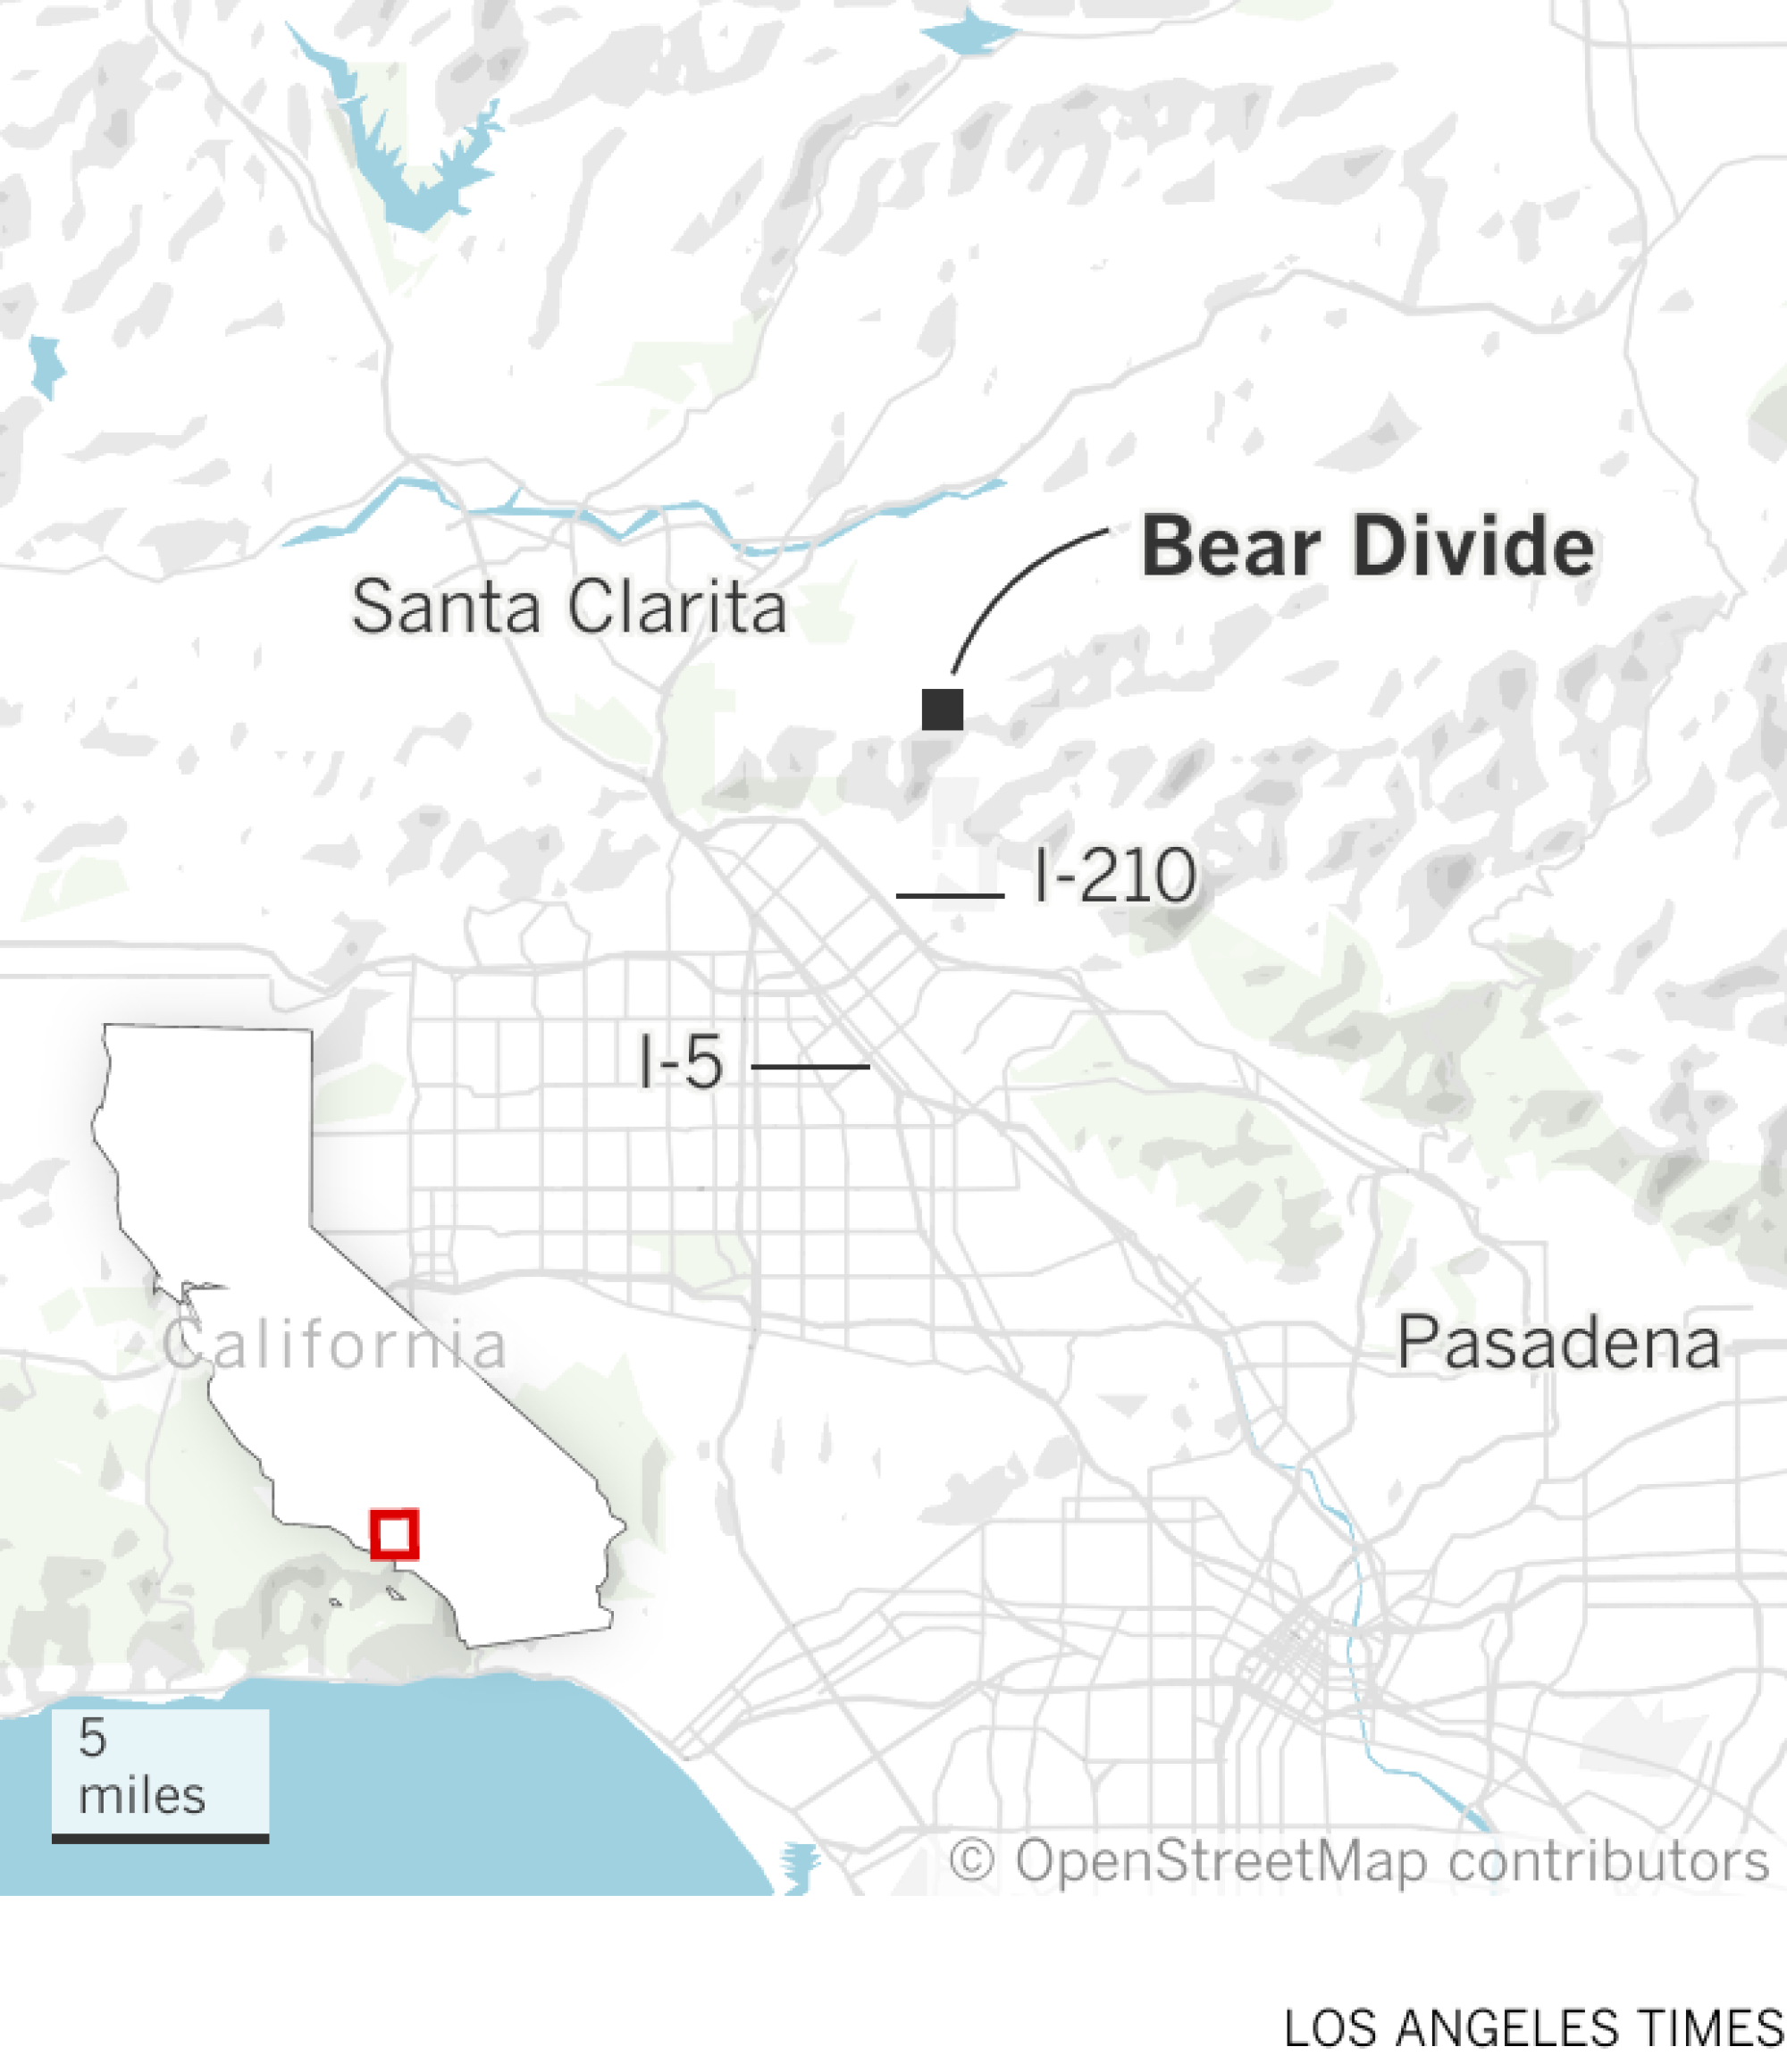 Bear Divide